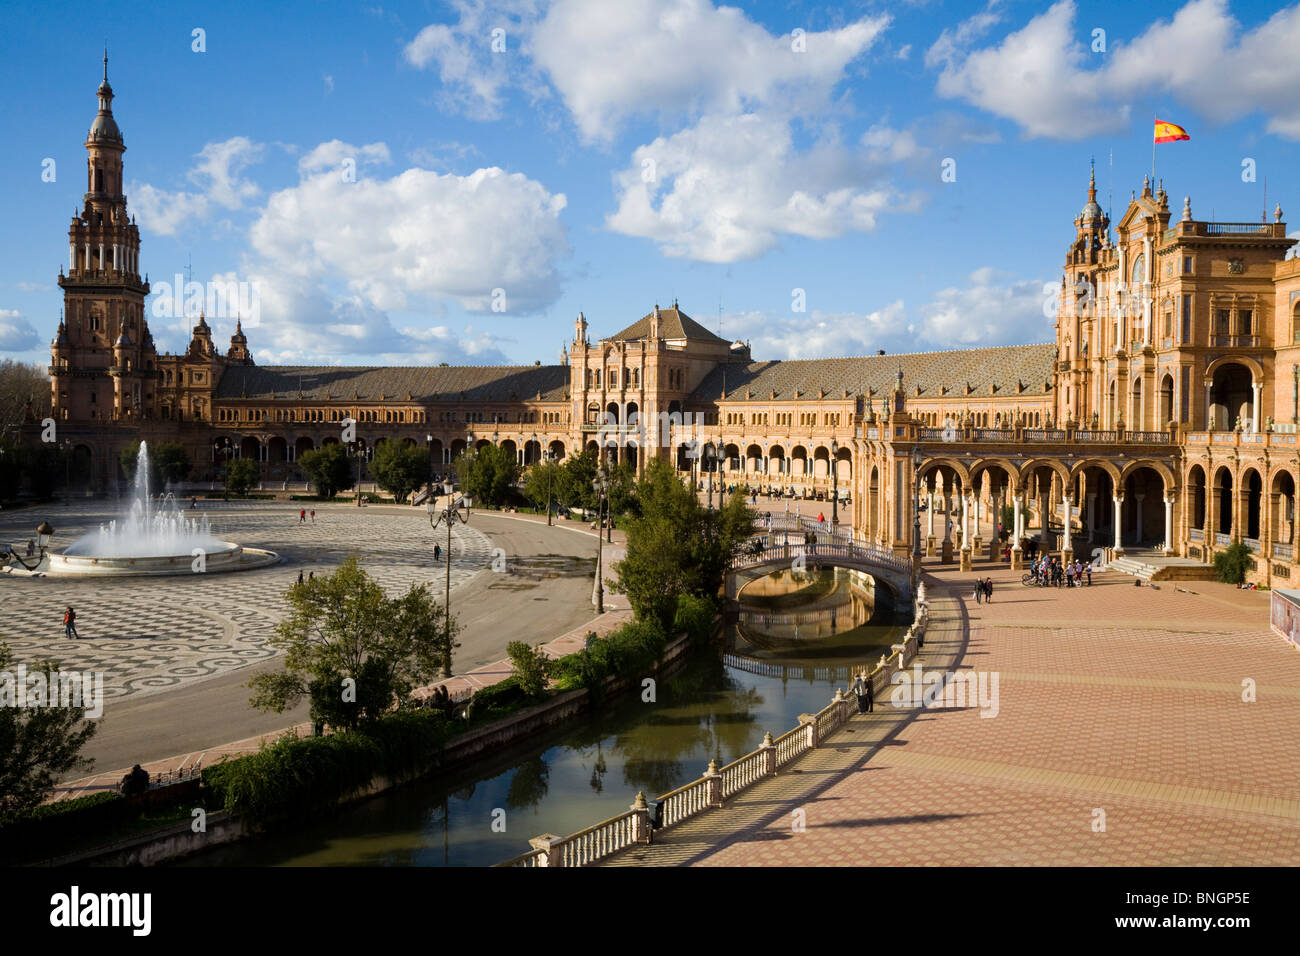 Sevilla ist die Plaza de España de Sevilla. Sevilla, Spanien. An einem sonnigen Tag mit blauem Himmel. Stockfoto